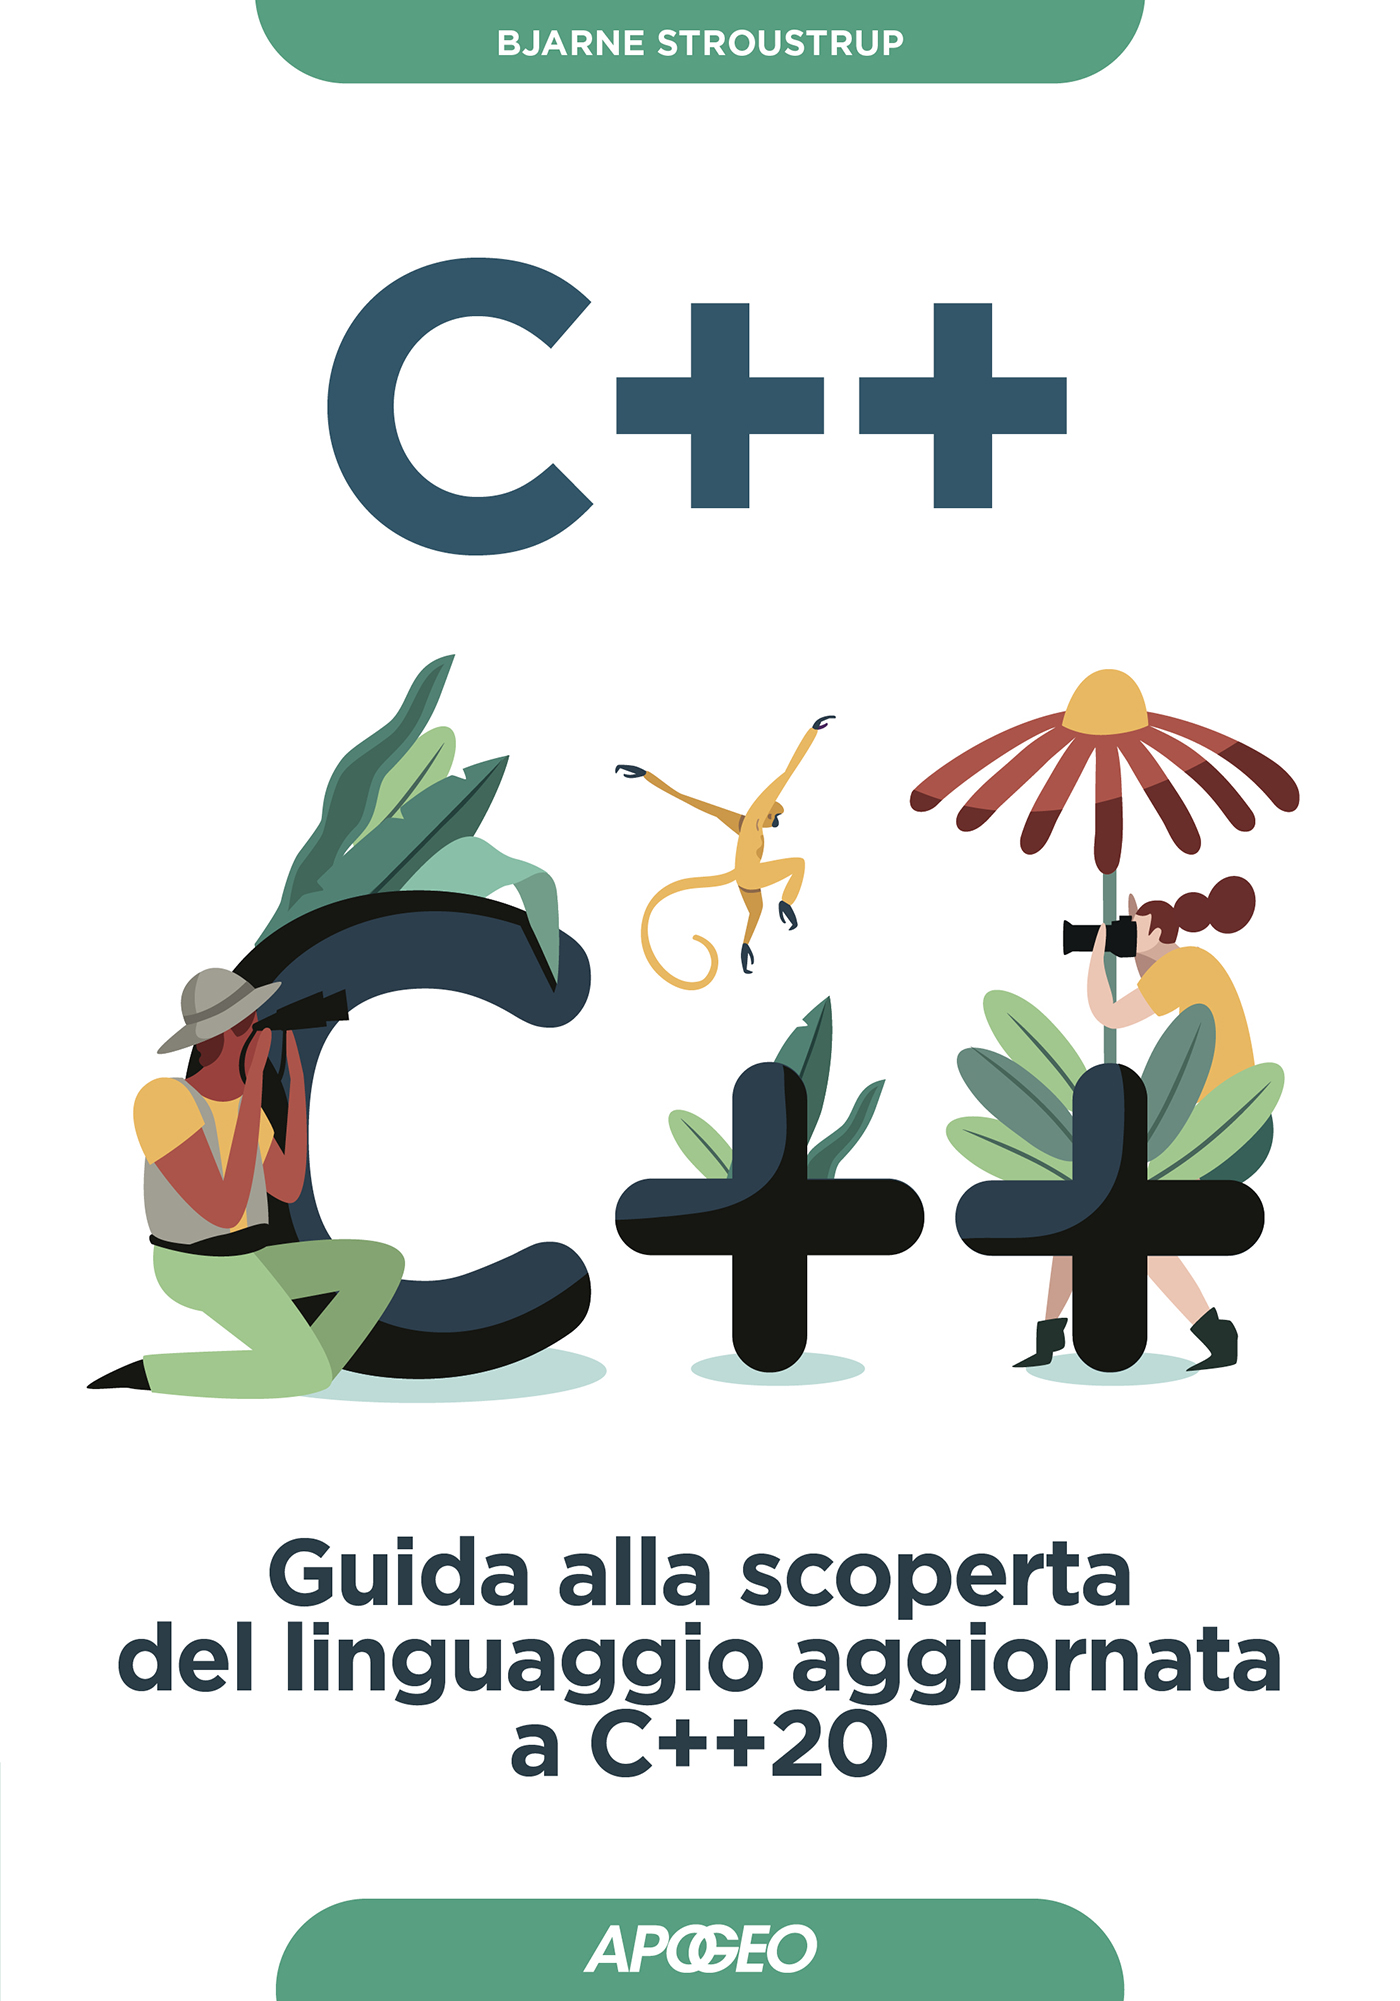 C++ Bjarne Stroustrup – copertina